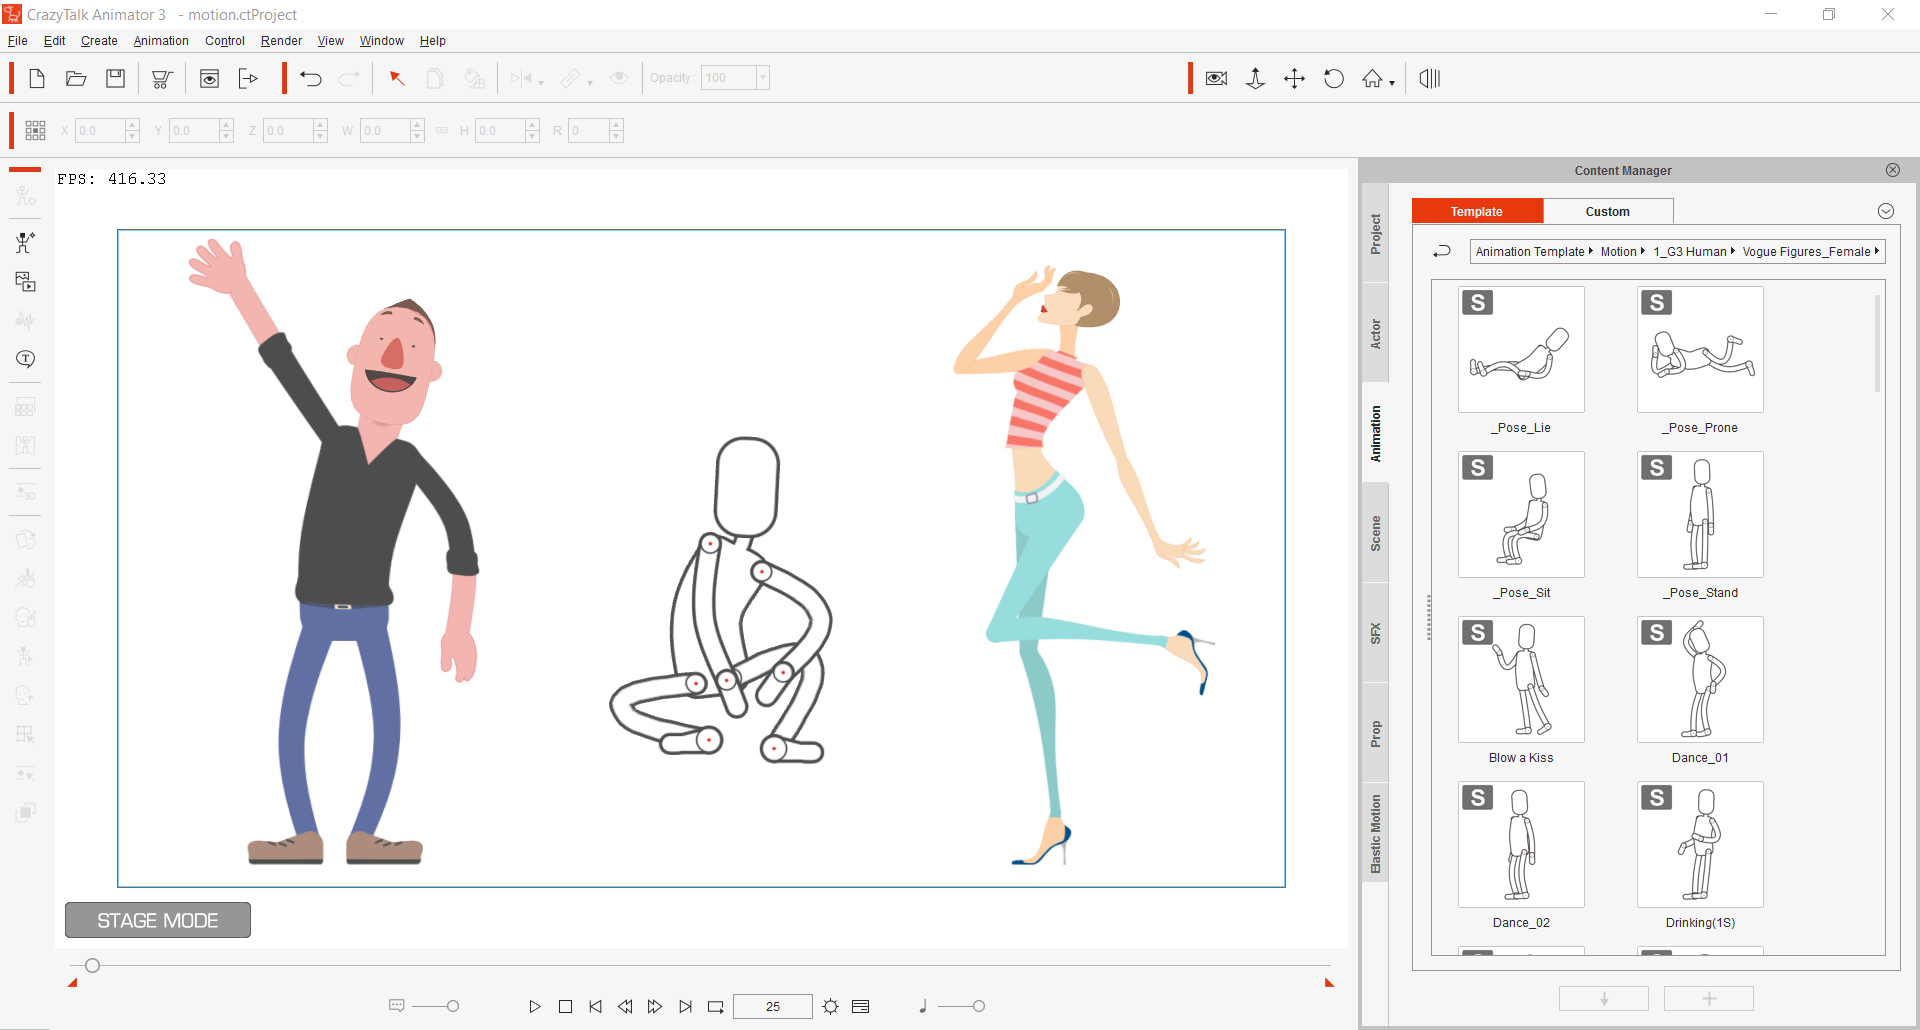 crazytalk animator pro templates for blogger